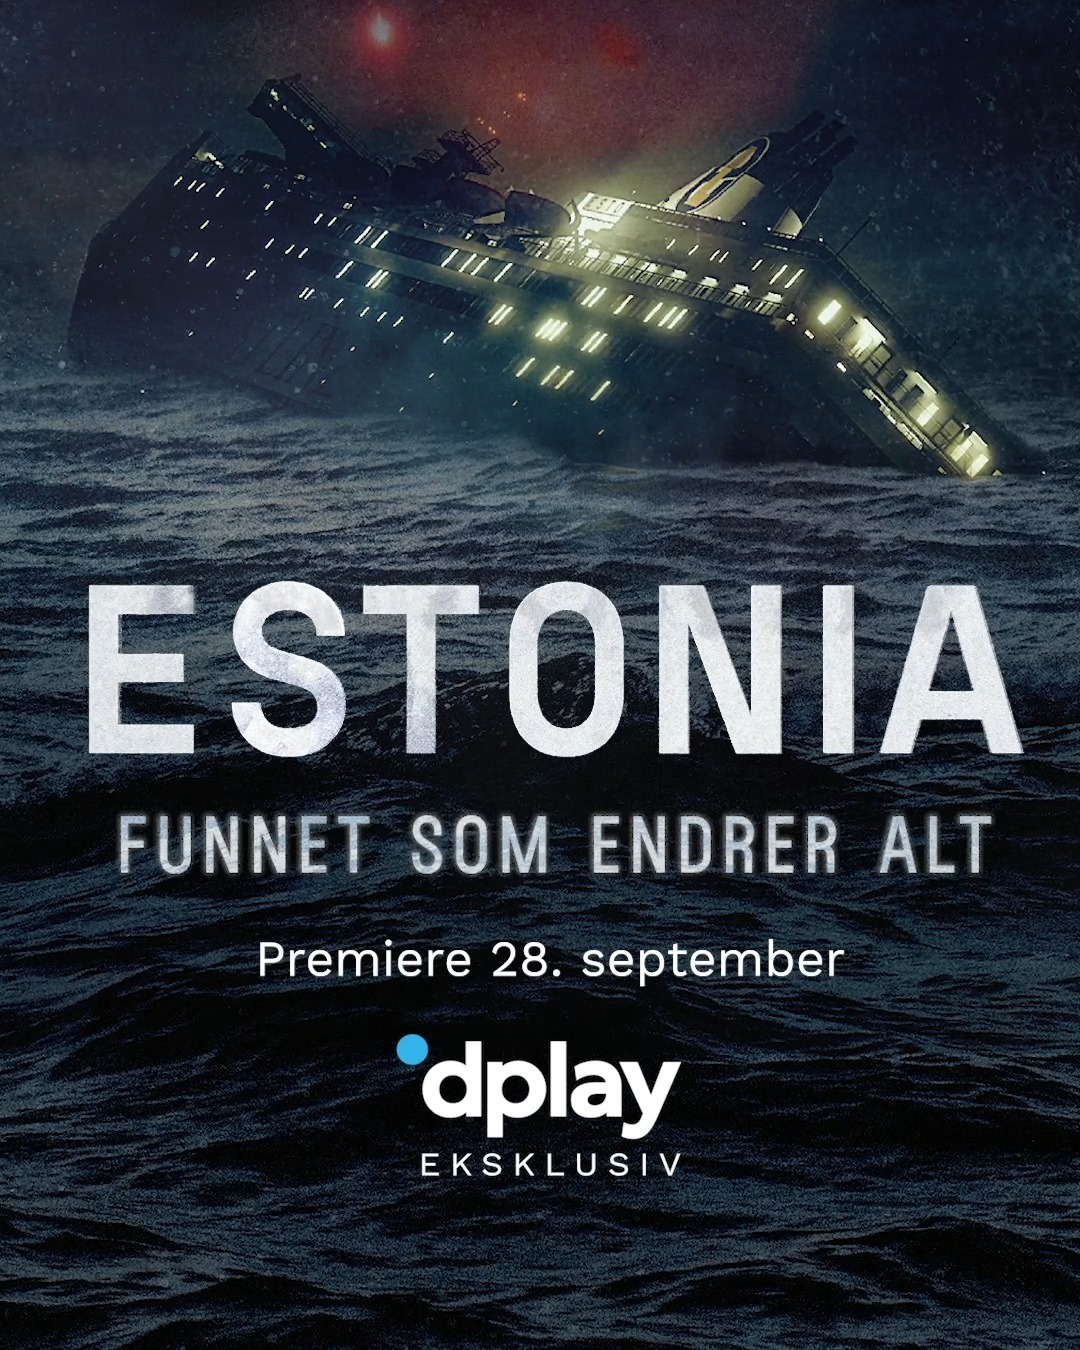     Estonia: Katastrofa na morzu. Nowe fakty